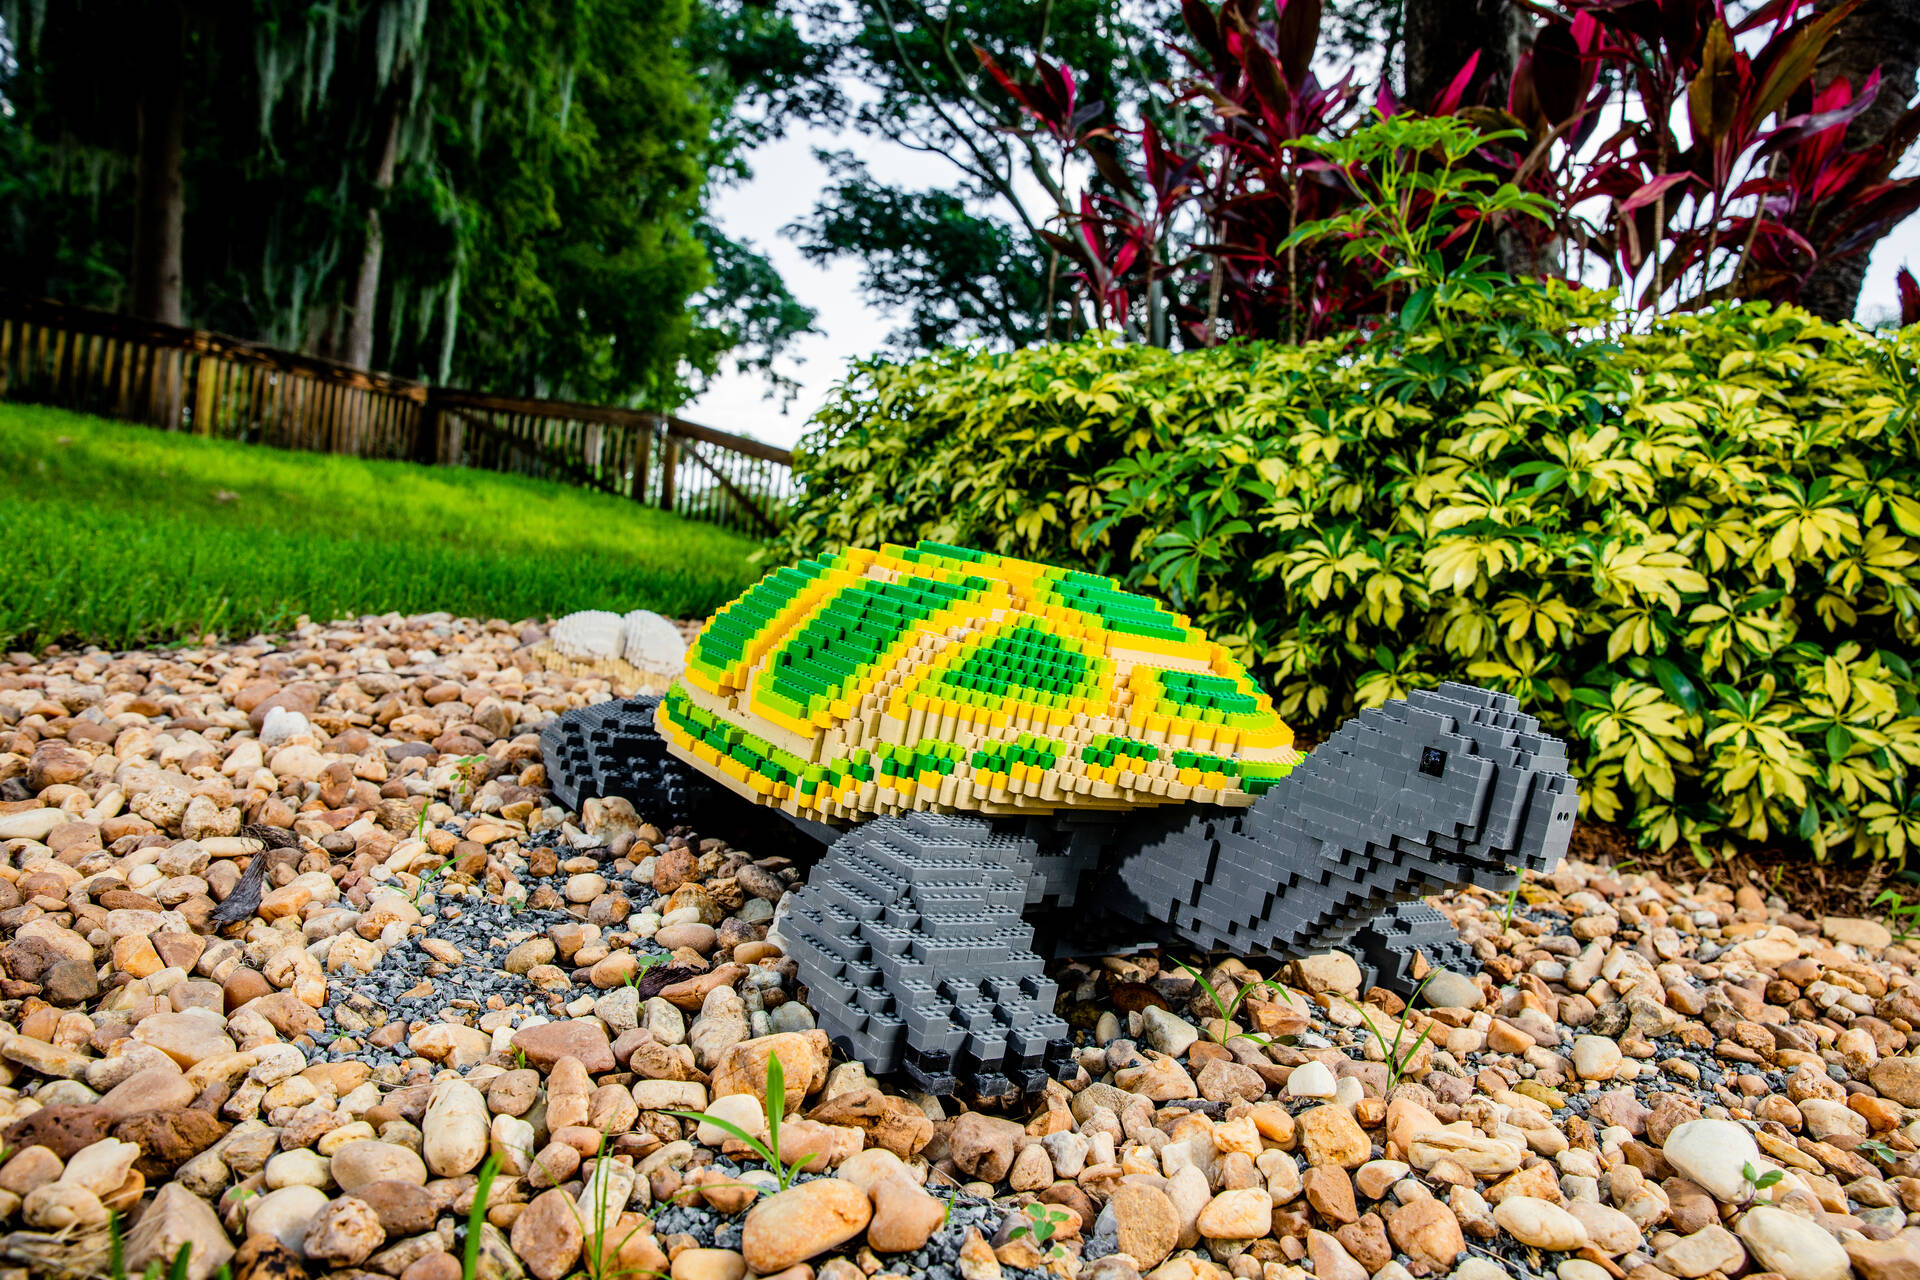 LEGO Turtle Model Alongside Wild Side Mini Golf Course